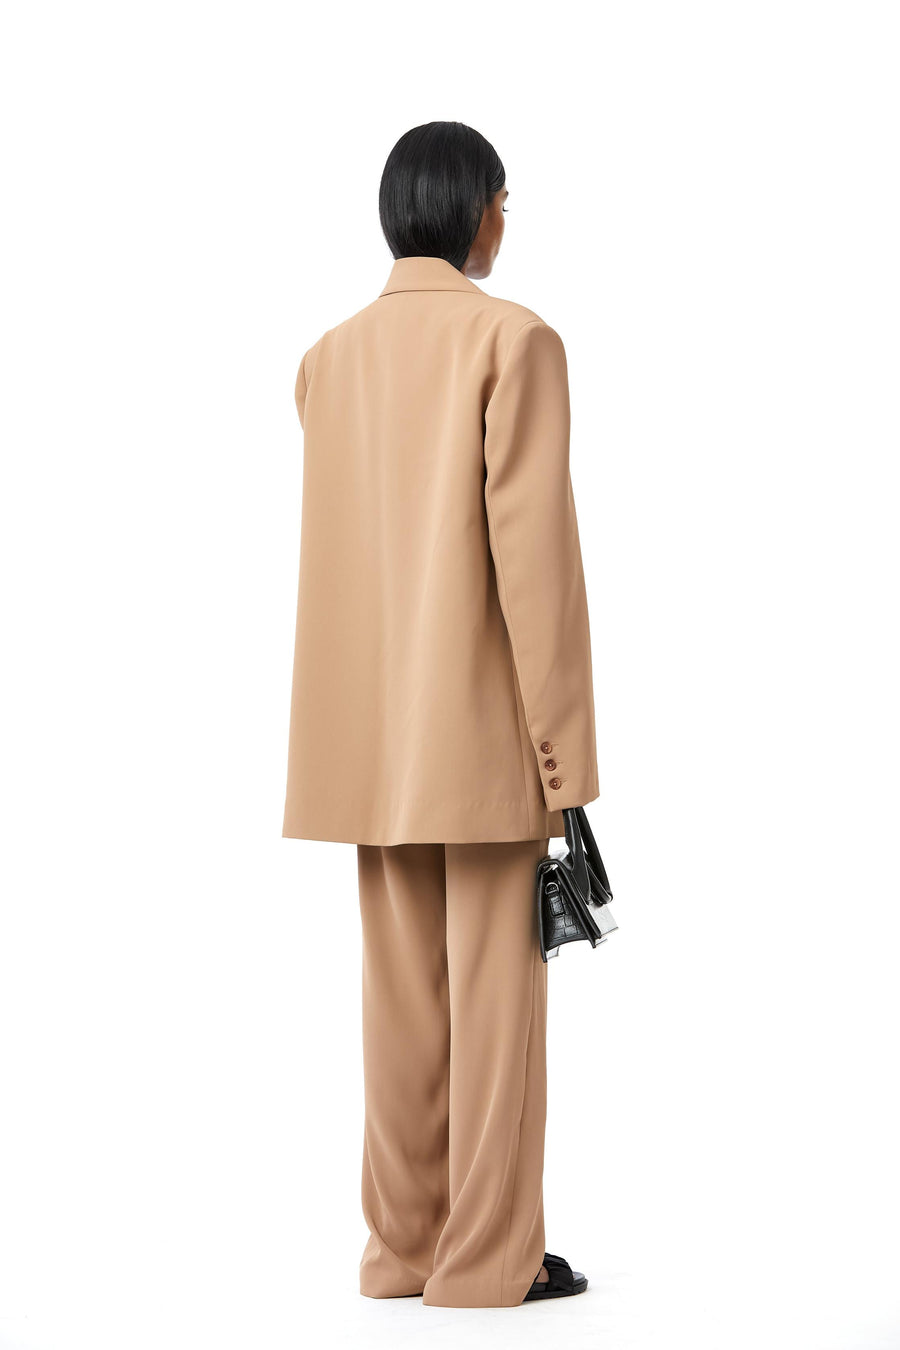 Flap overlay blazer matching pants - Kanika Goyal Label